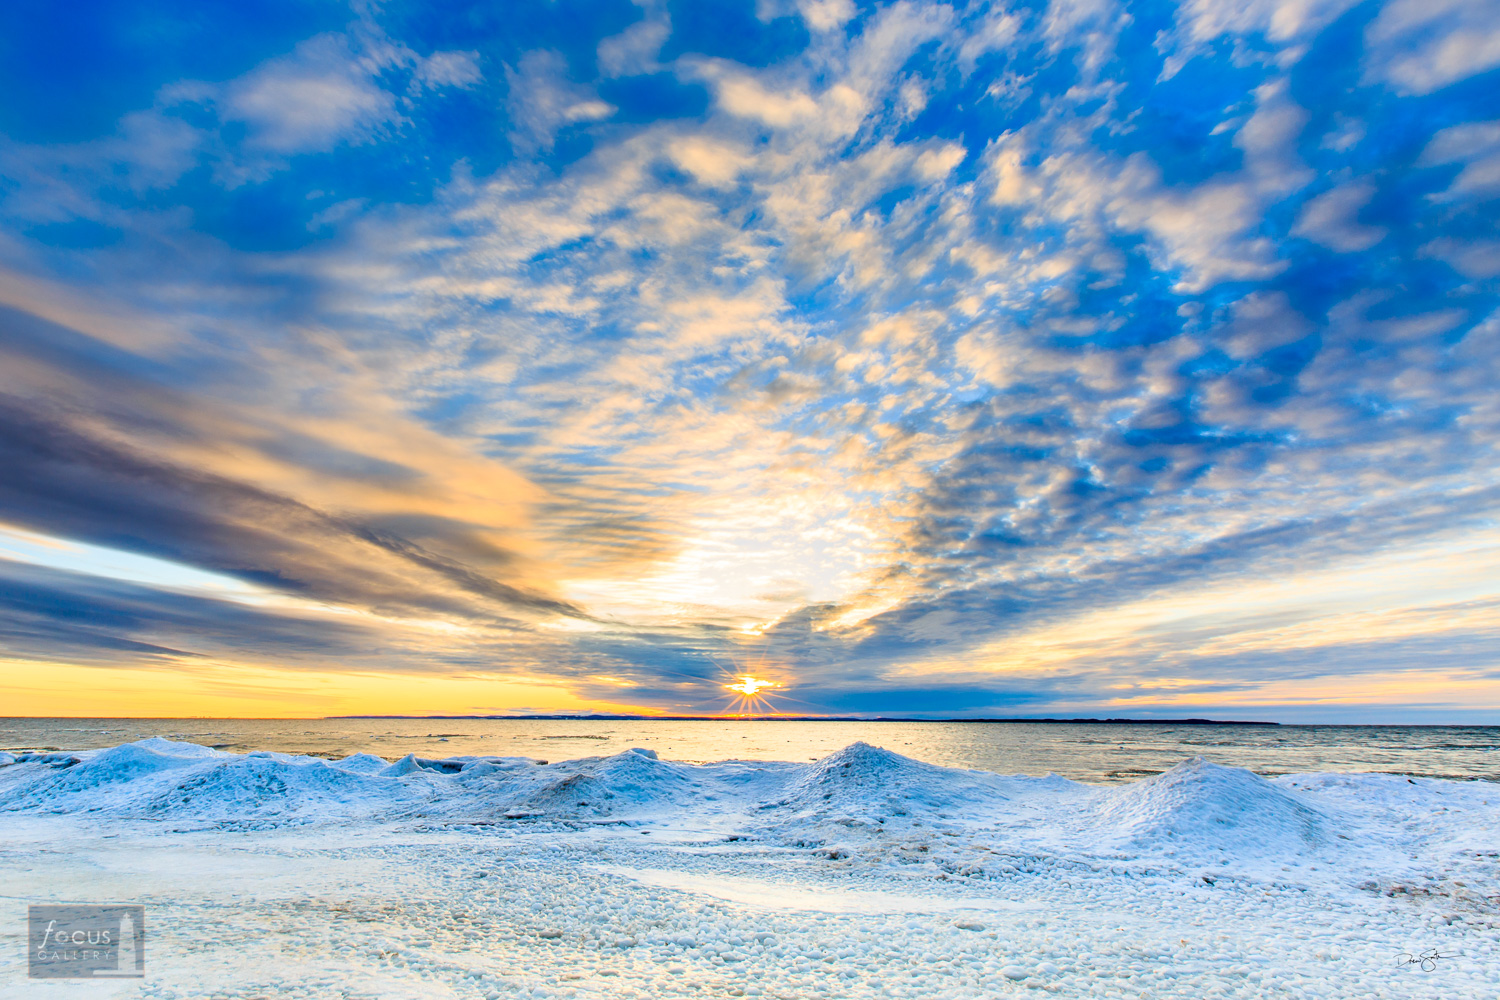 Winter sunset over icy shoreline of Lake Michigan.